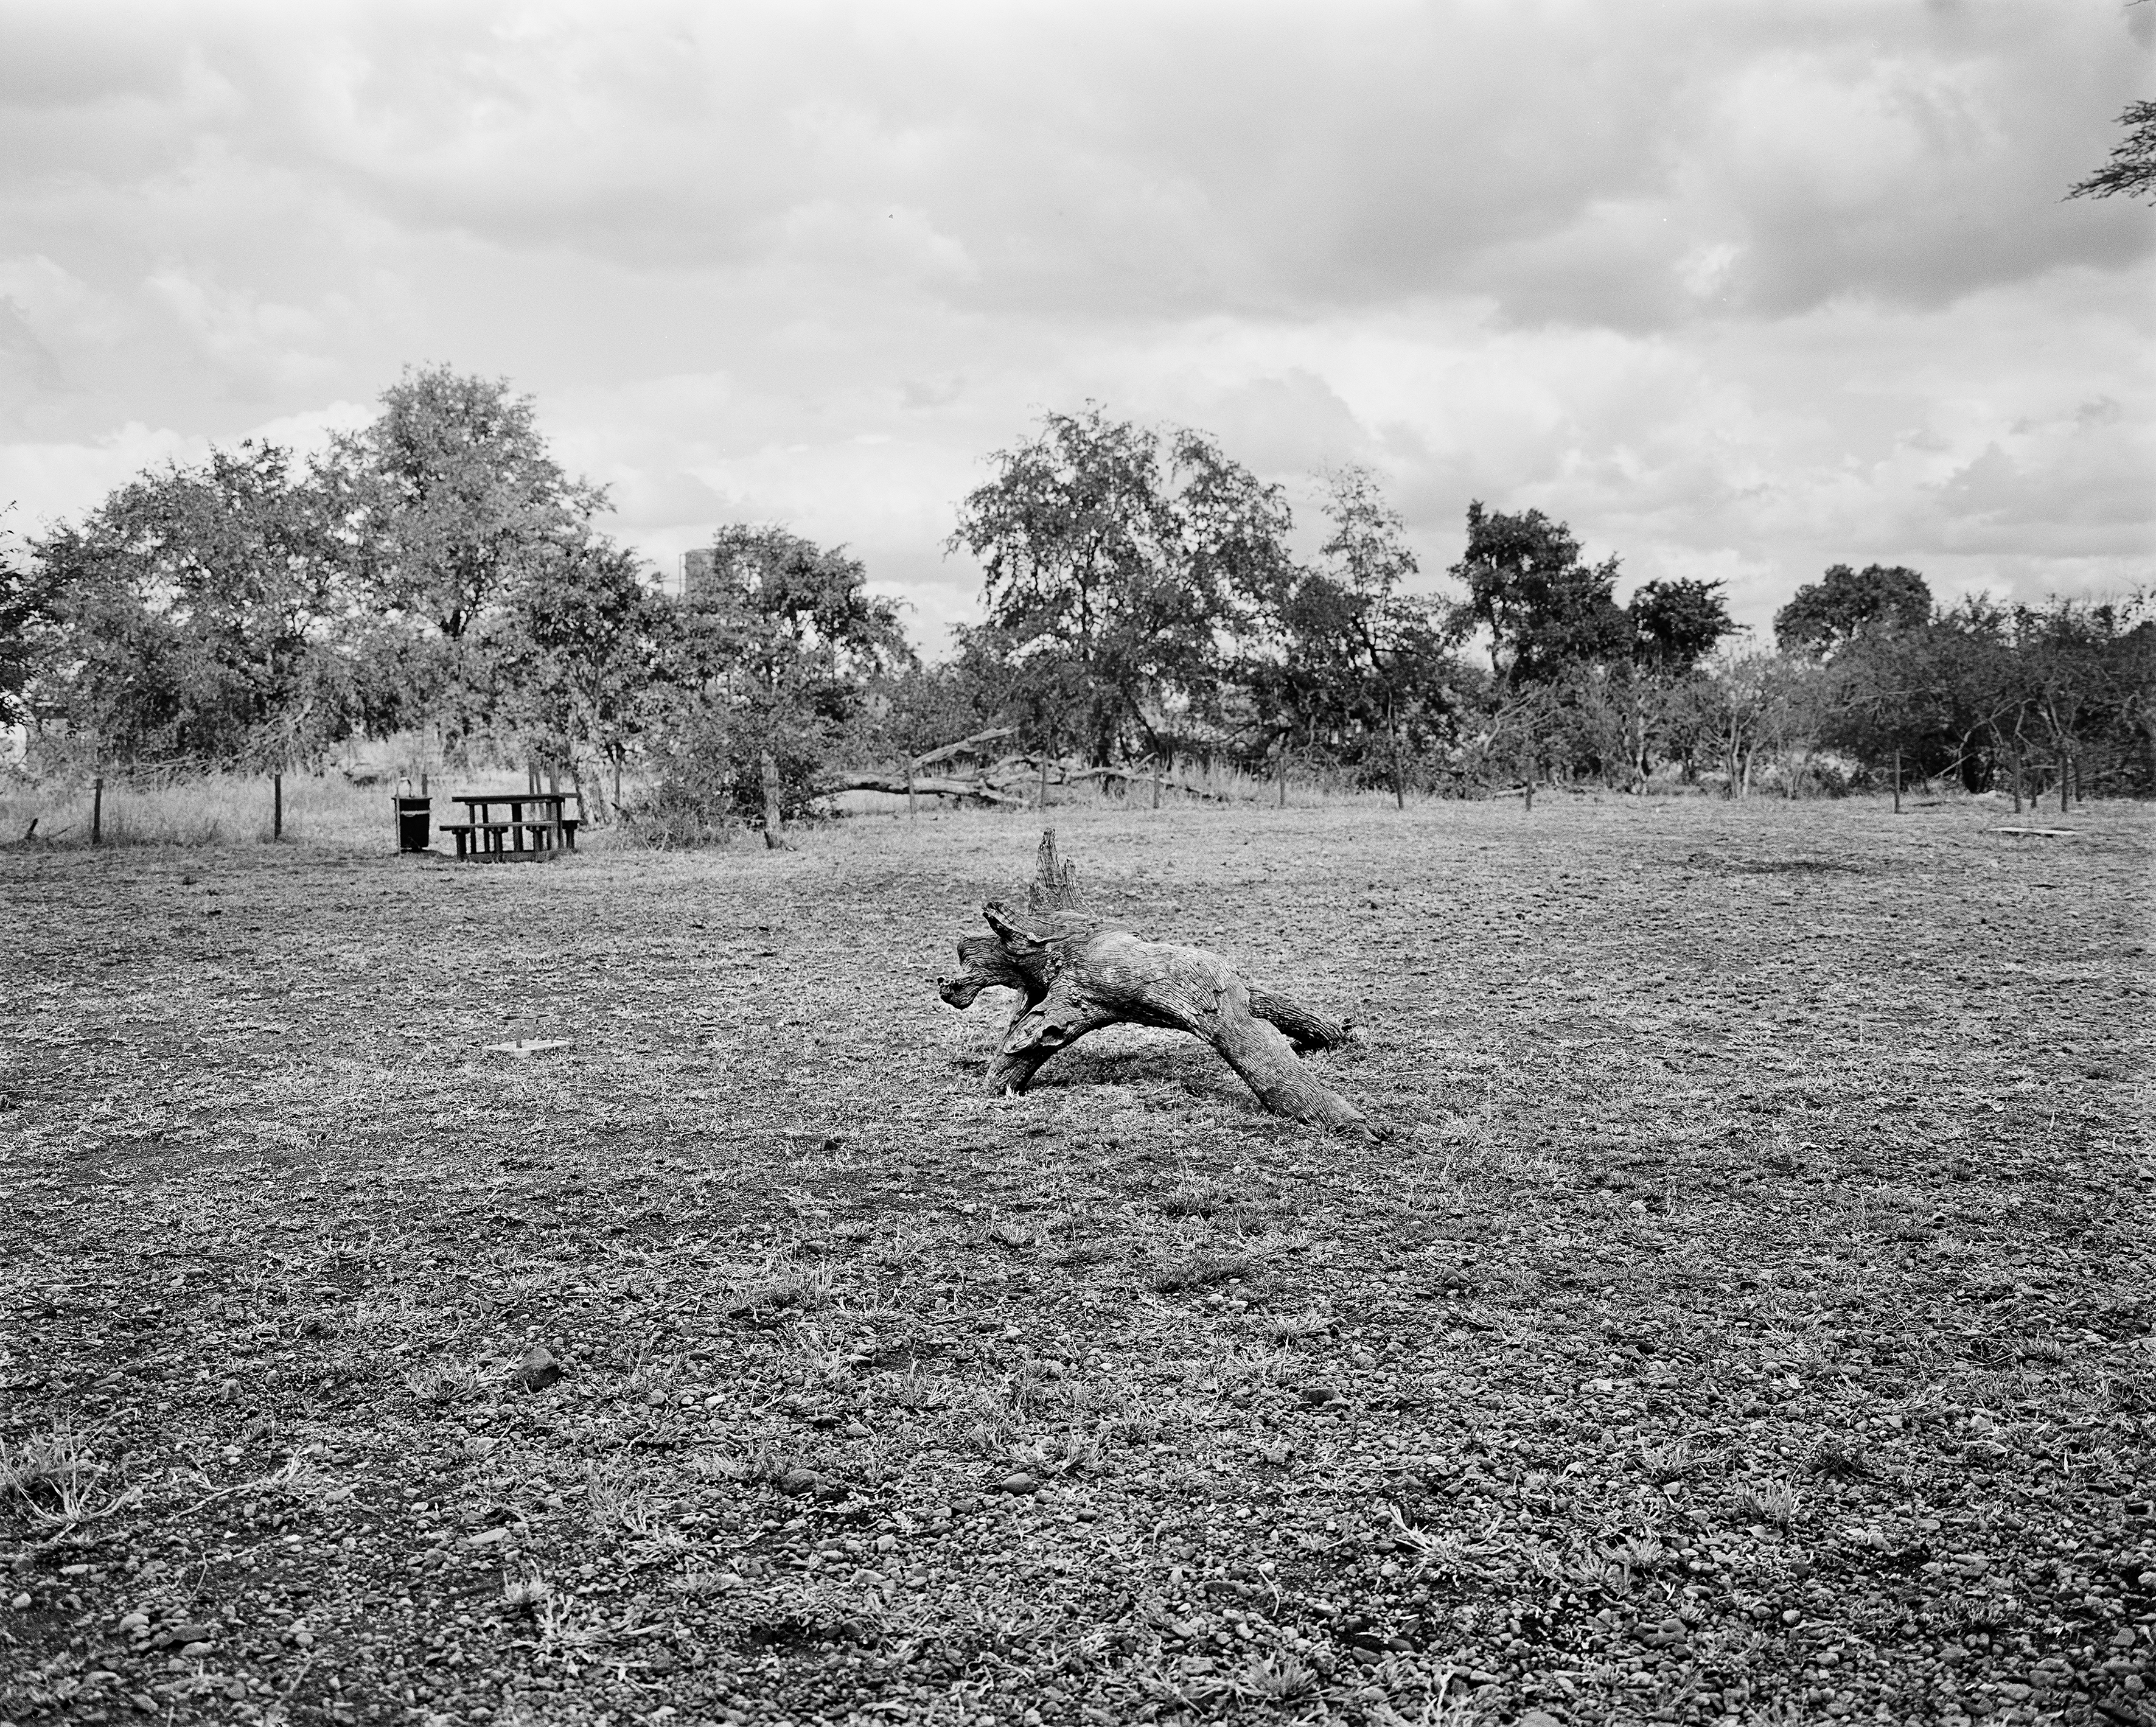  - A picnic place, Kruger National Park, 2015